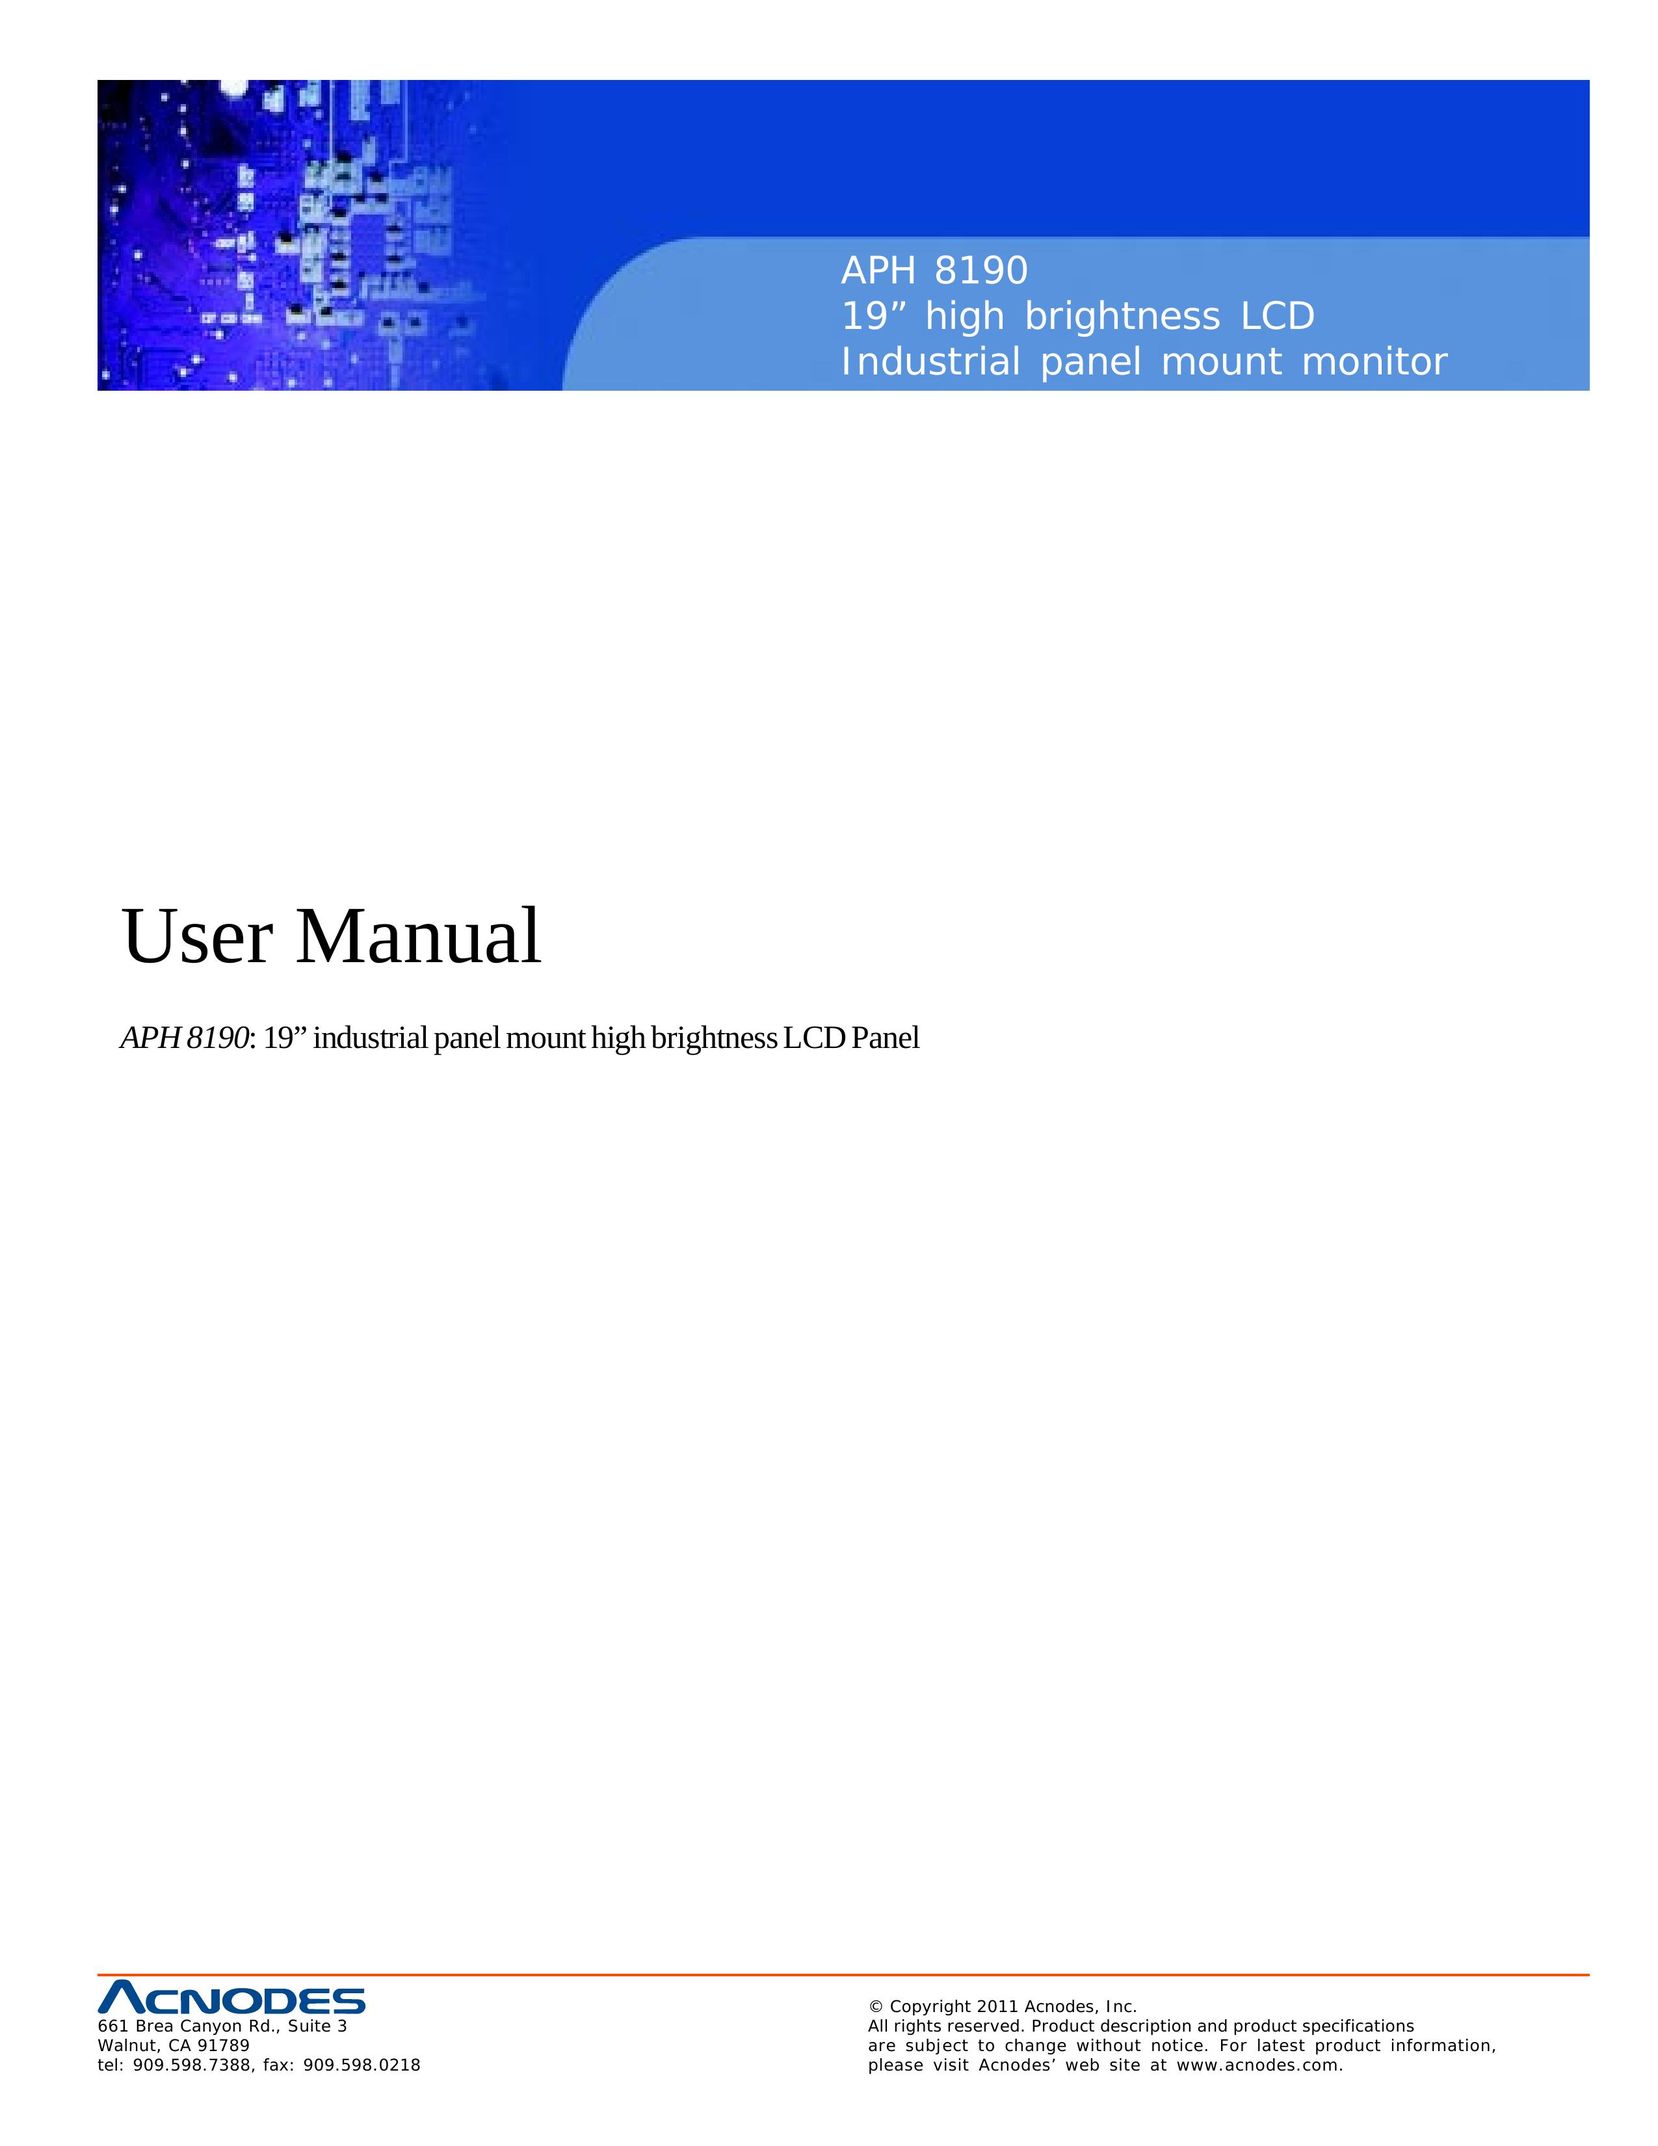 Acnodes APH 8190 Computer Monitor User Manual